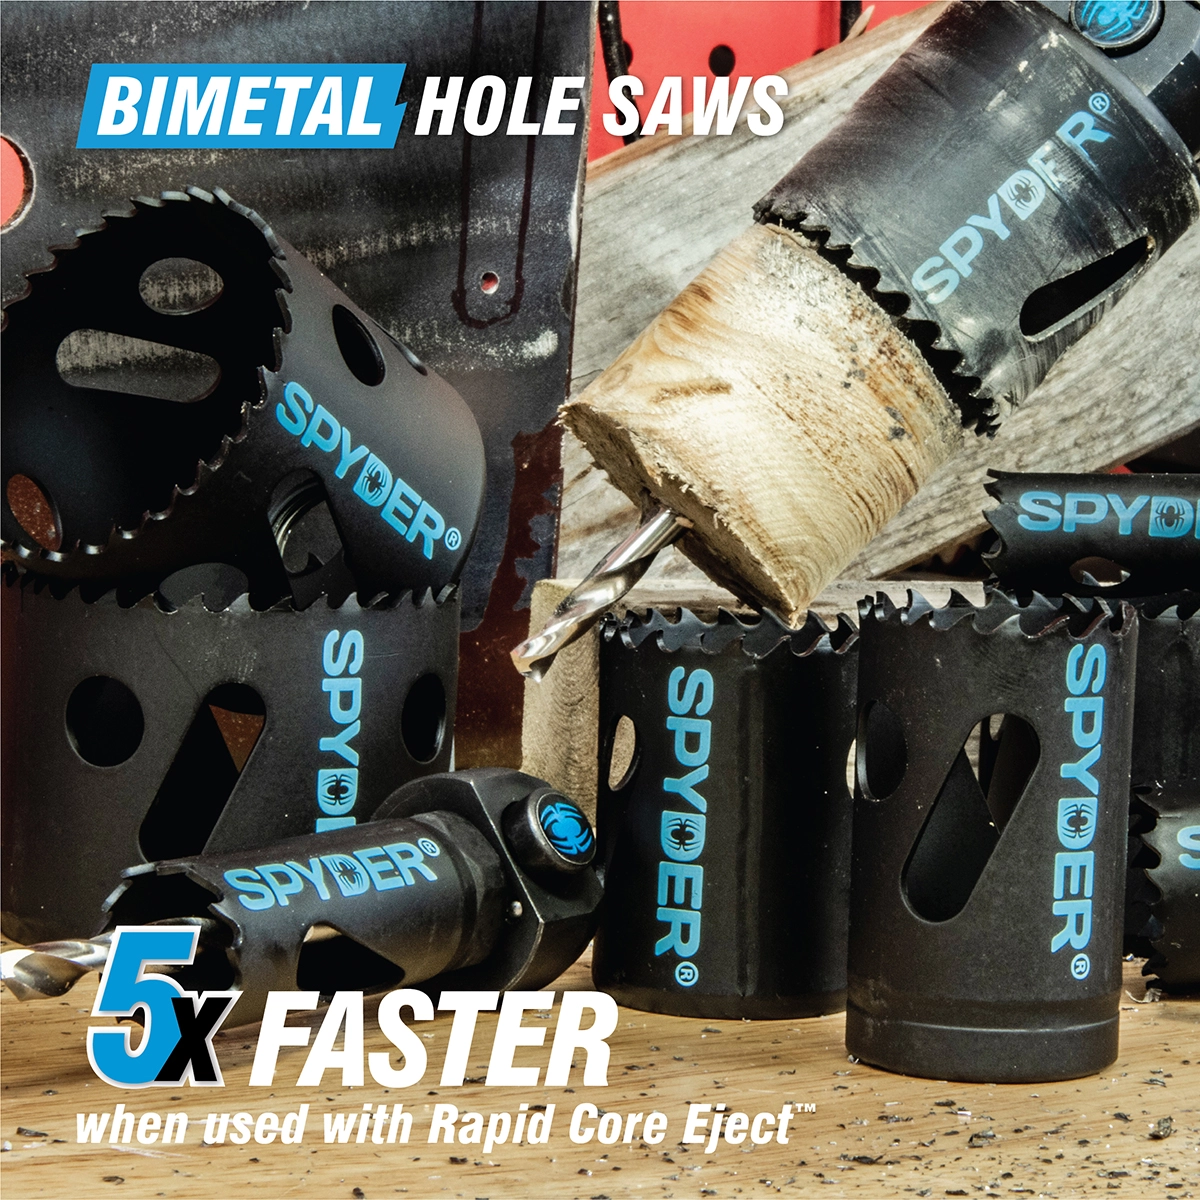 Bi-Metal Hole Saws - Spyder Products